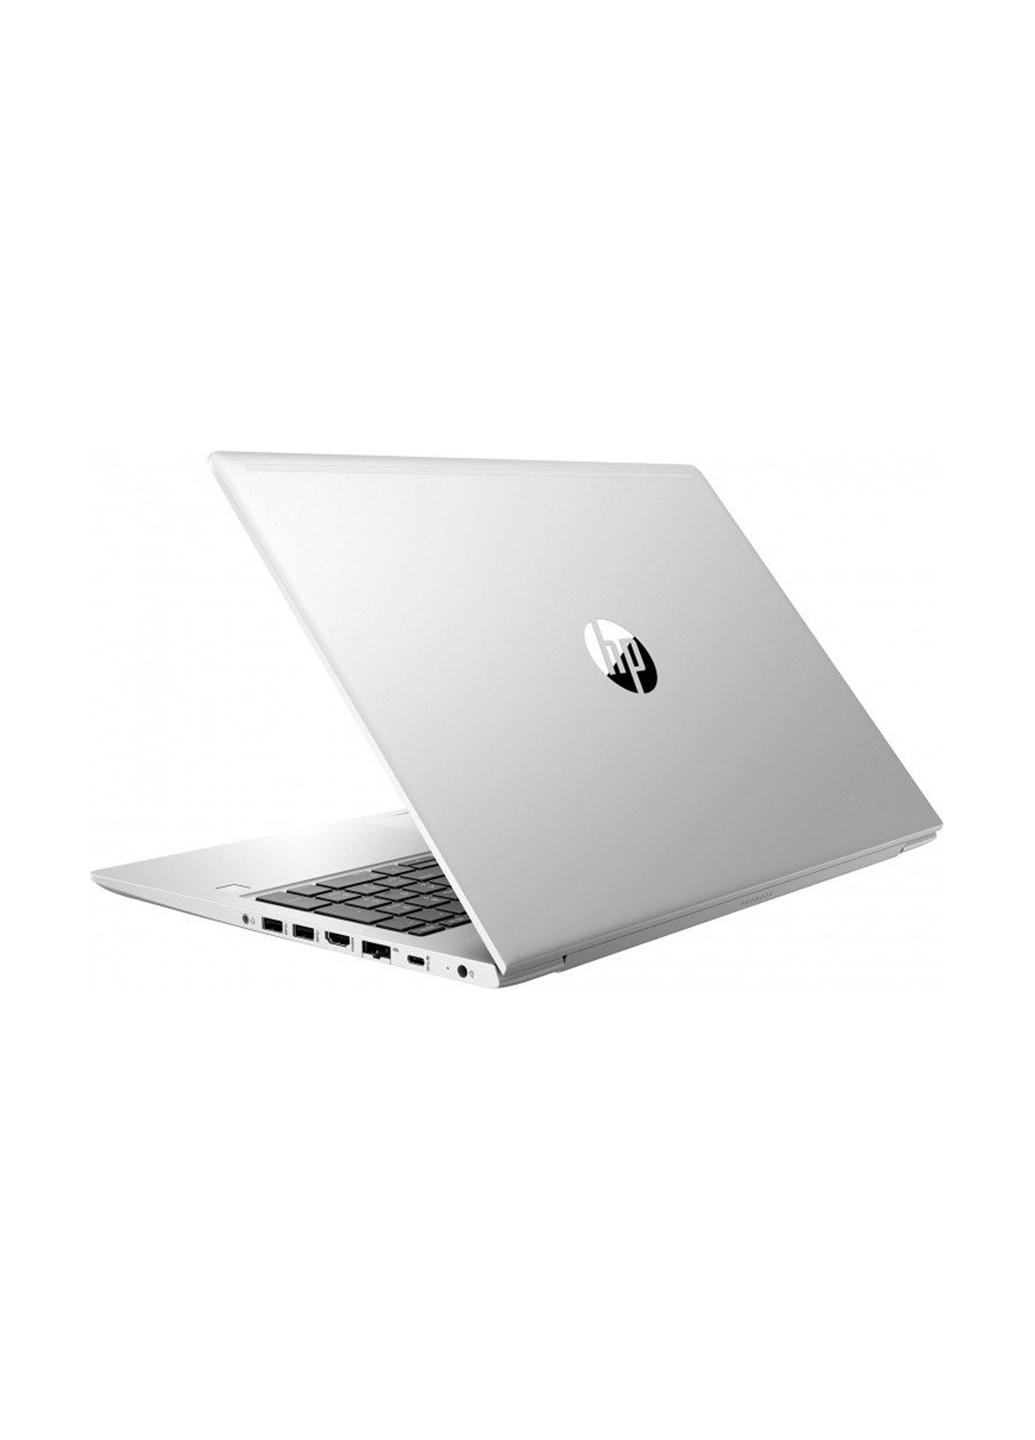 Ноутбук HP probook 450 g6 (4sz47av_v28) silver (173921827)